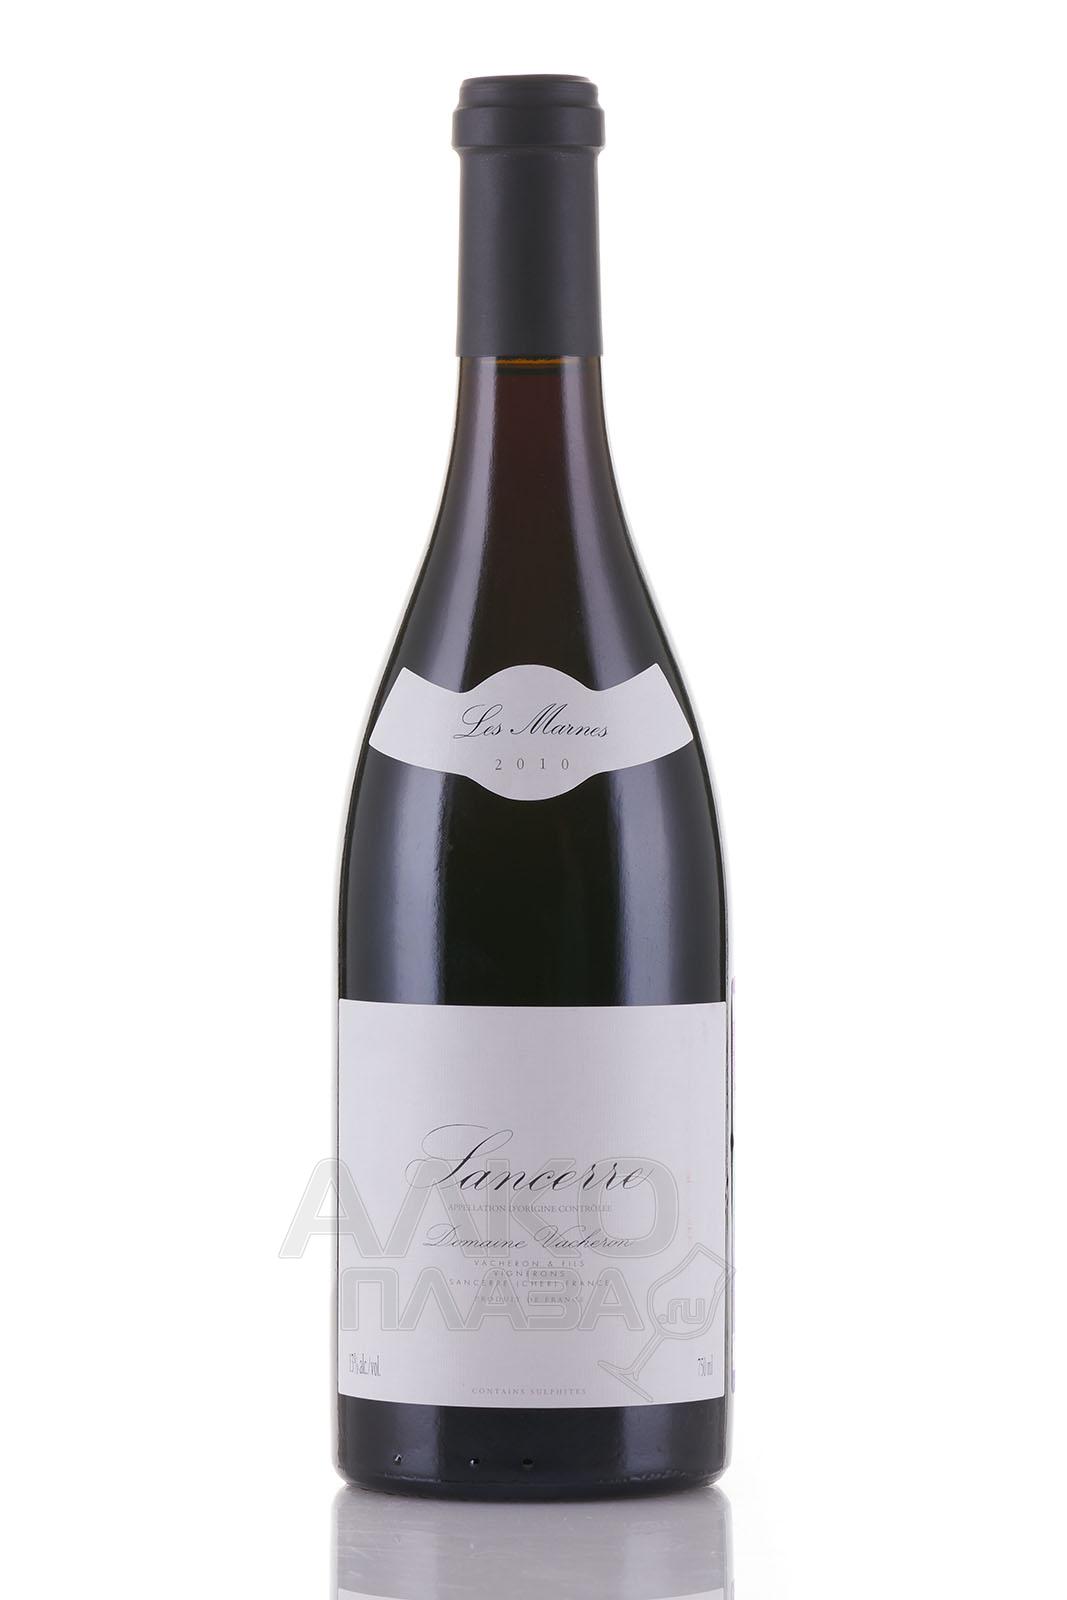 Les Marnes Sancerre AOC - вино Сансер Ле Марн АОС 0.75 л красное сухое